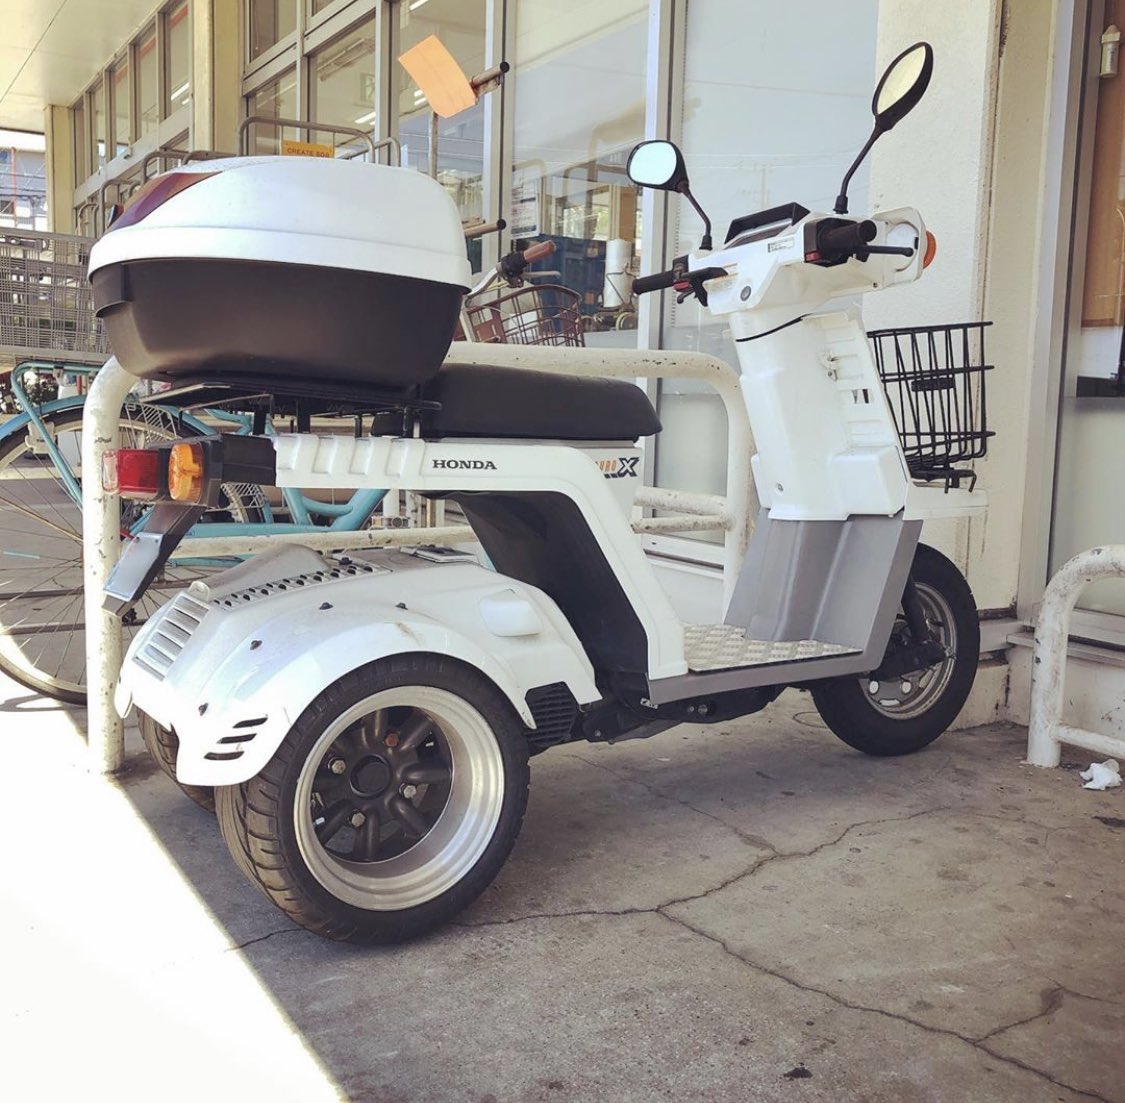 Honda Gyro X (three wheeled scooter) on Wats. What a time to be alive. (  https://www.instagram.com/p/B1_50oYnQZW/?igshid=10tshgk7jp1tp )